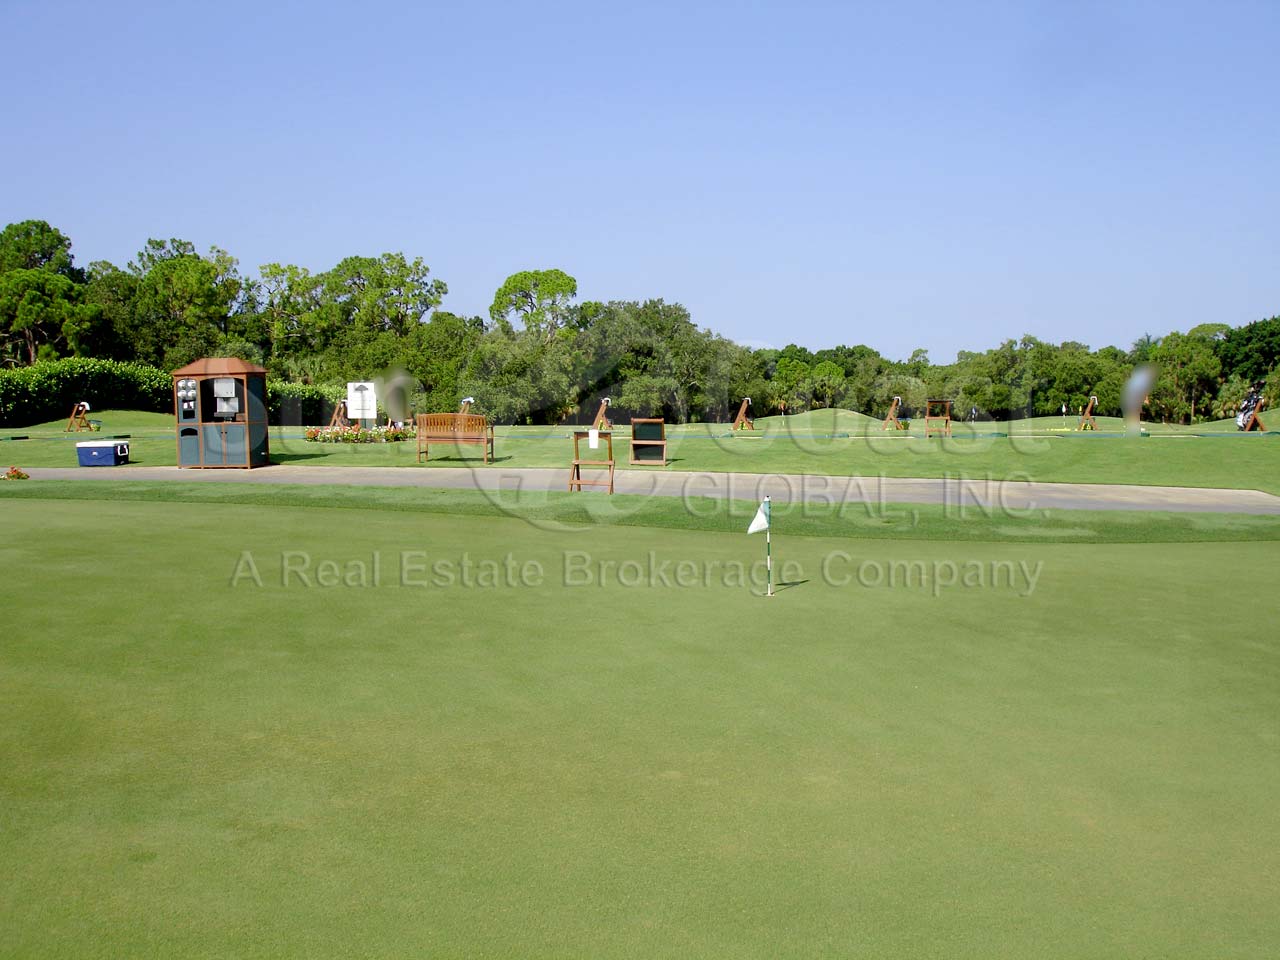 STONEBRIDGE golf range and practice putting green